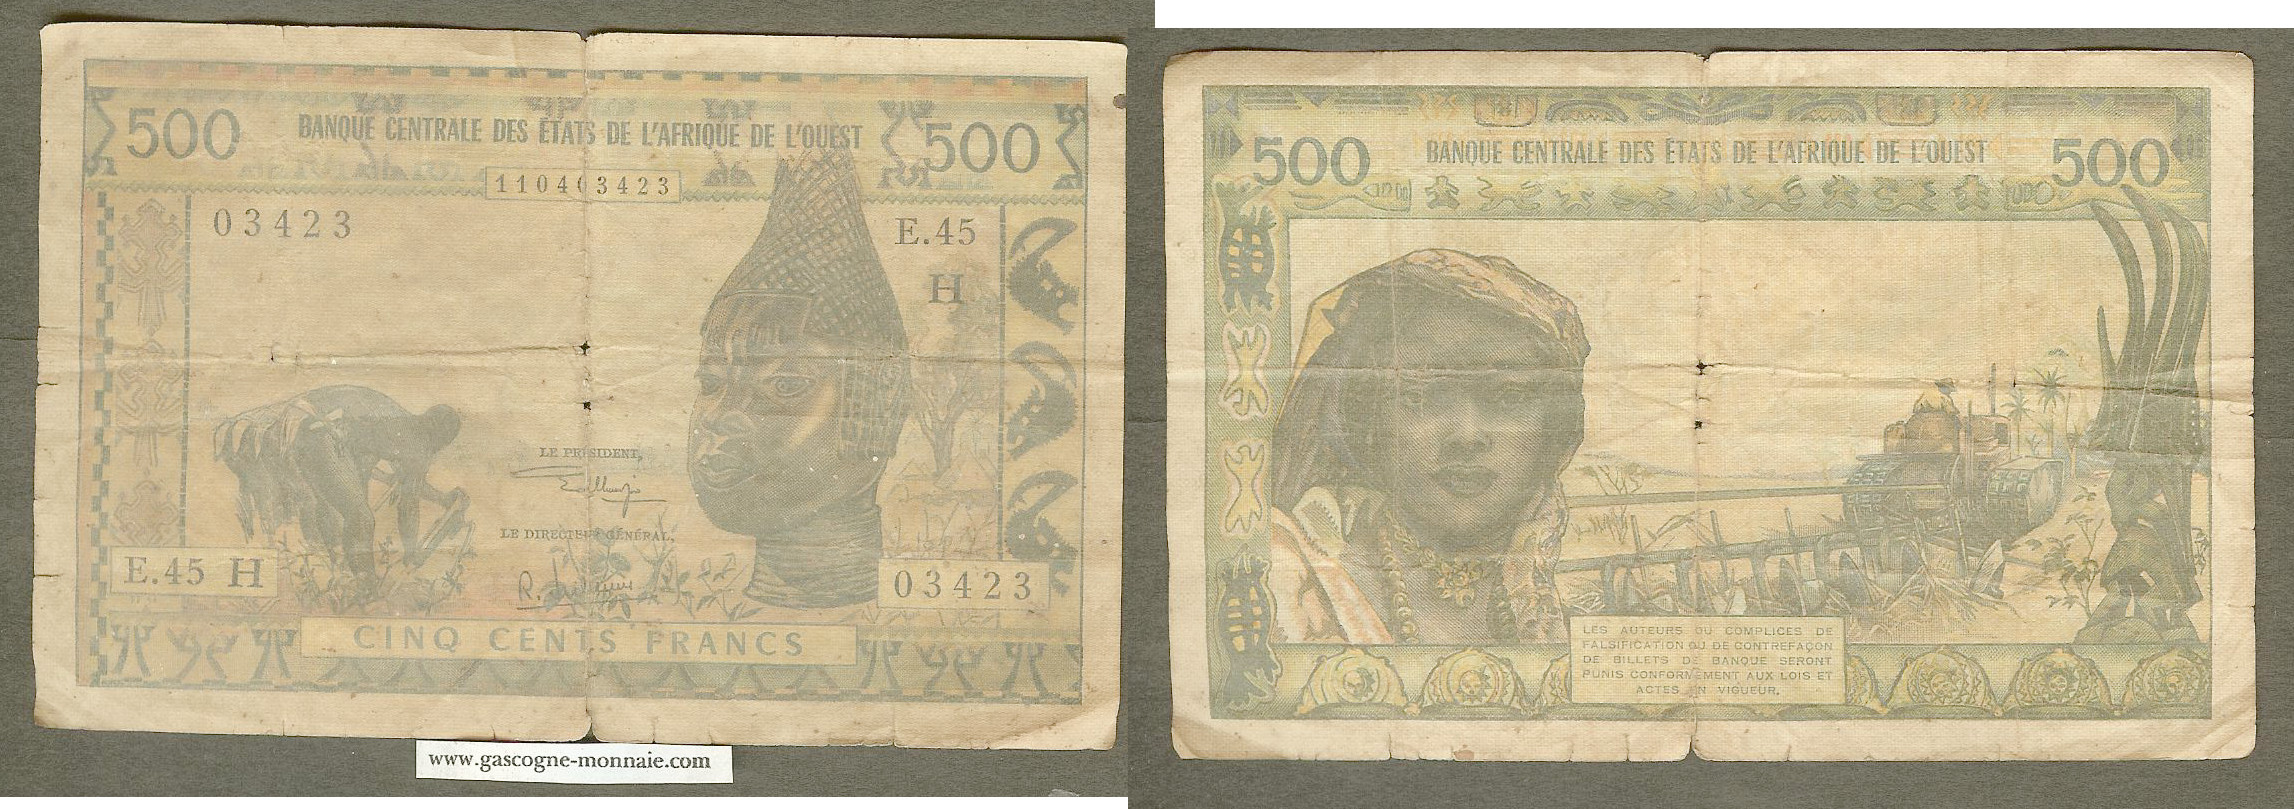 500 Francs ÉTATS DE L'AFRIQUE DE L'OUEST 1973  TB